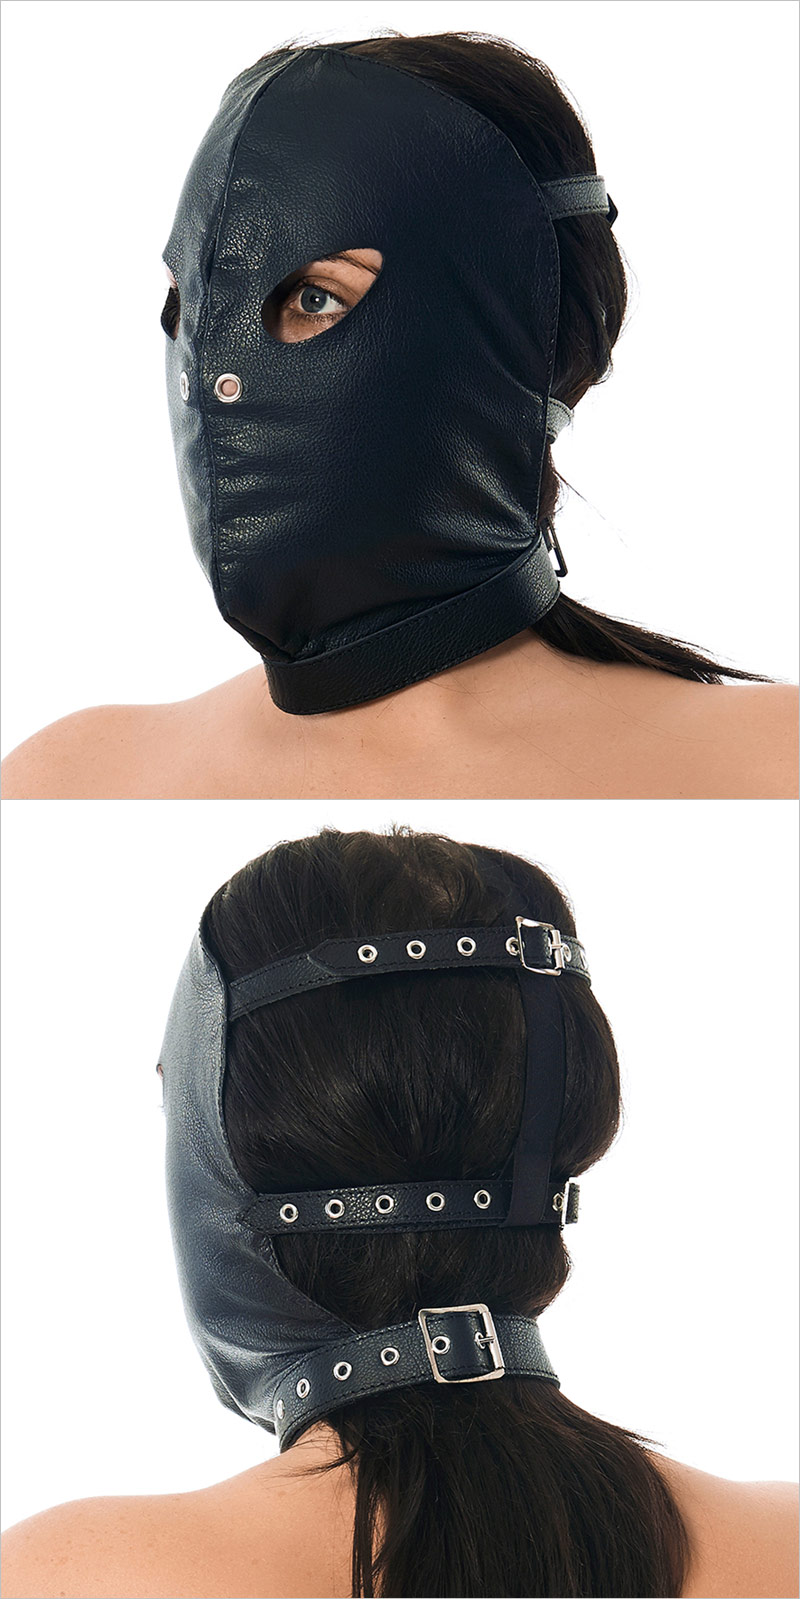 Rimba leather hood - Unisex and adjustable size